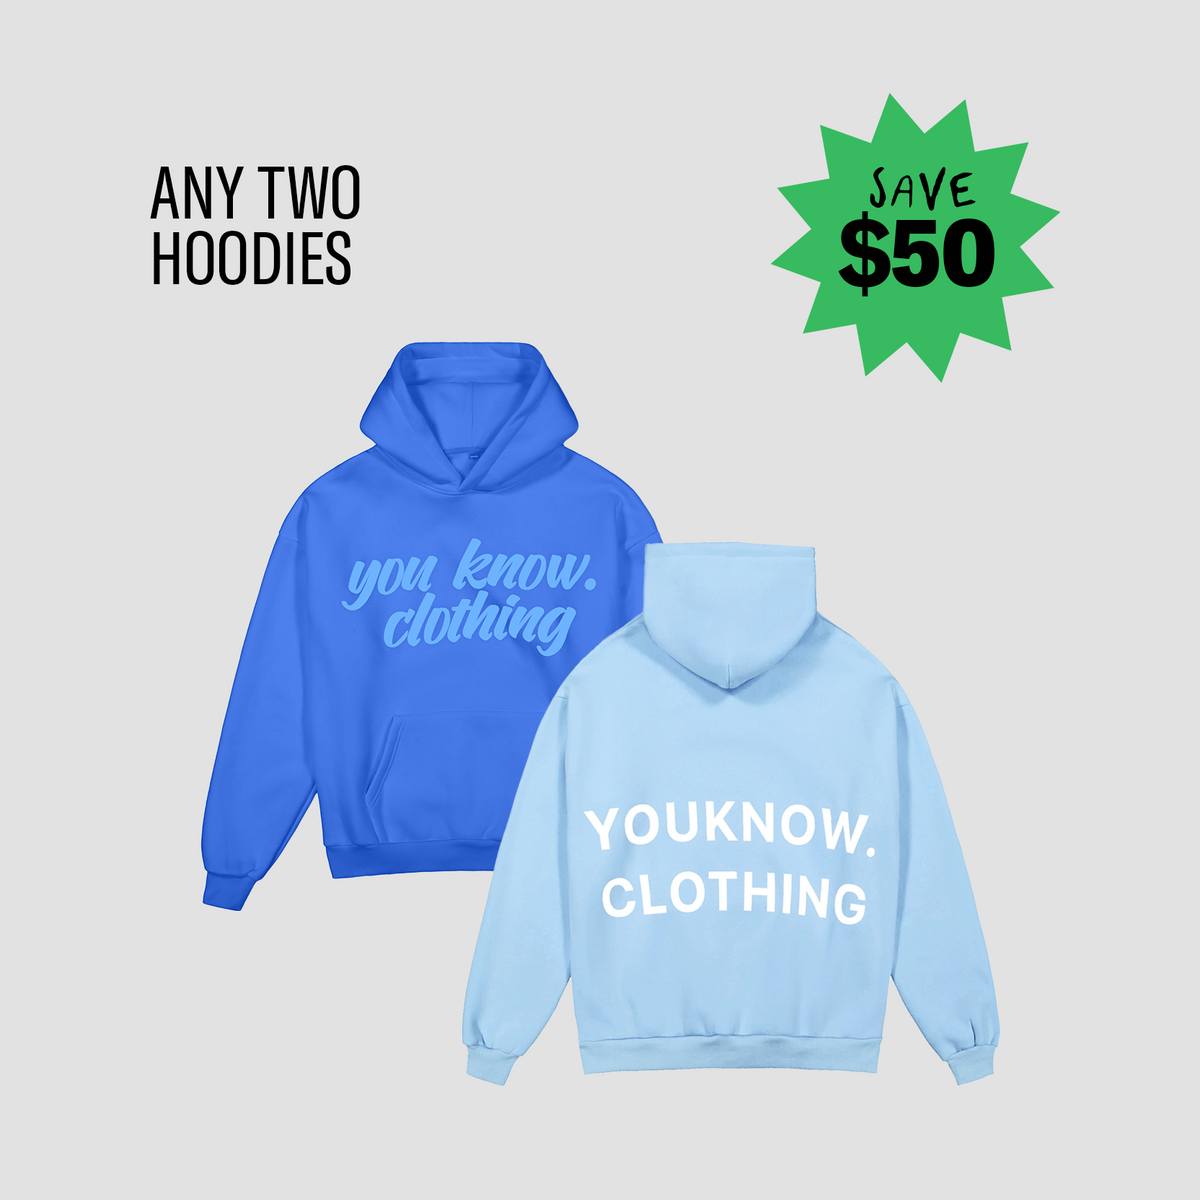 Buy Two Hoodies Save $50